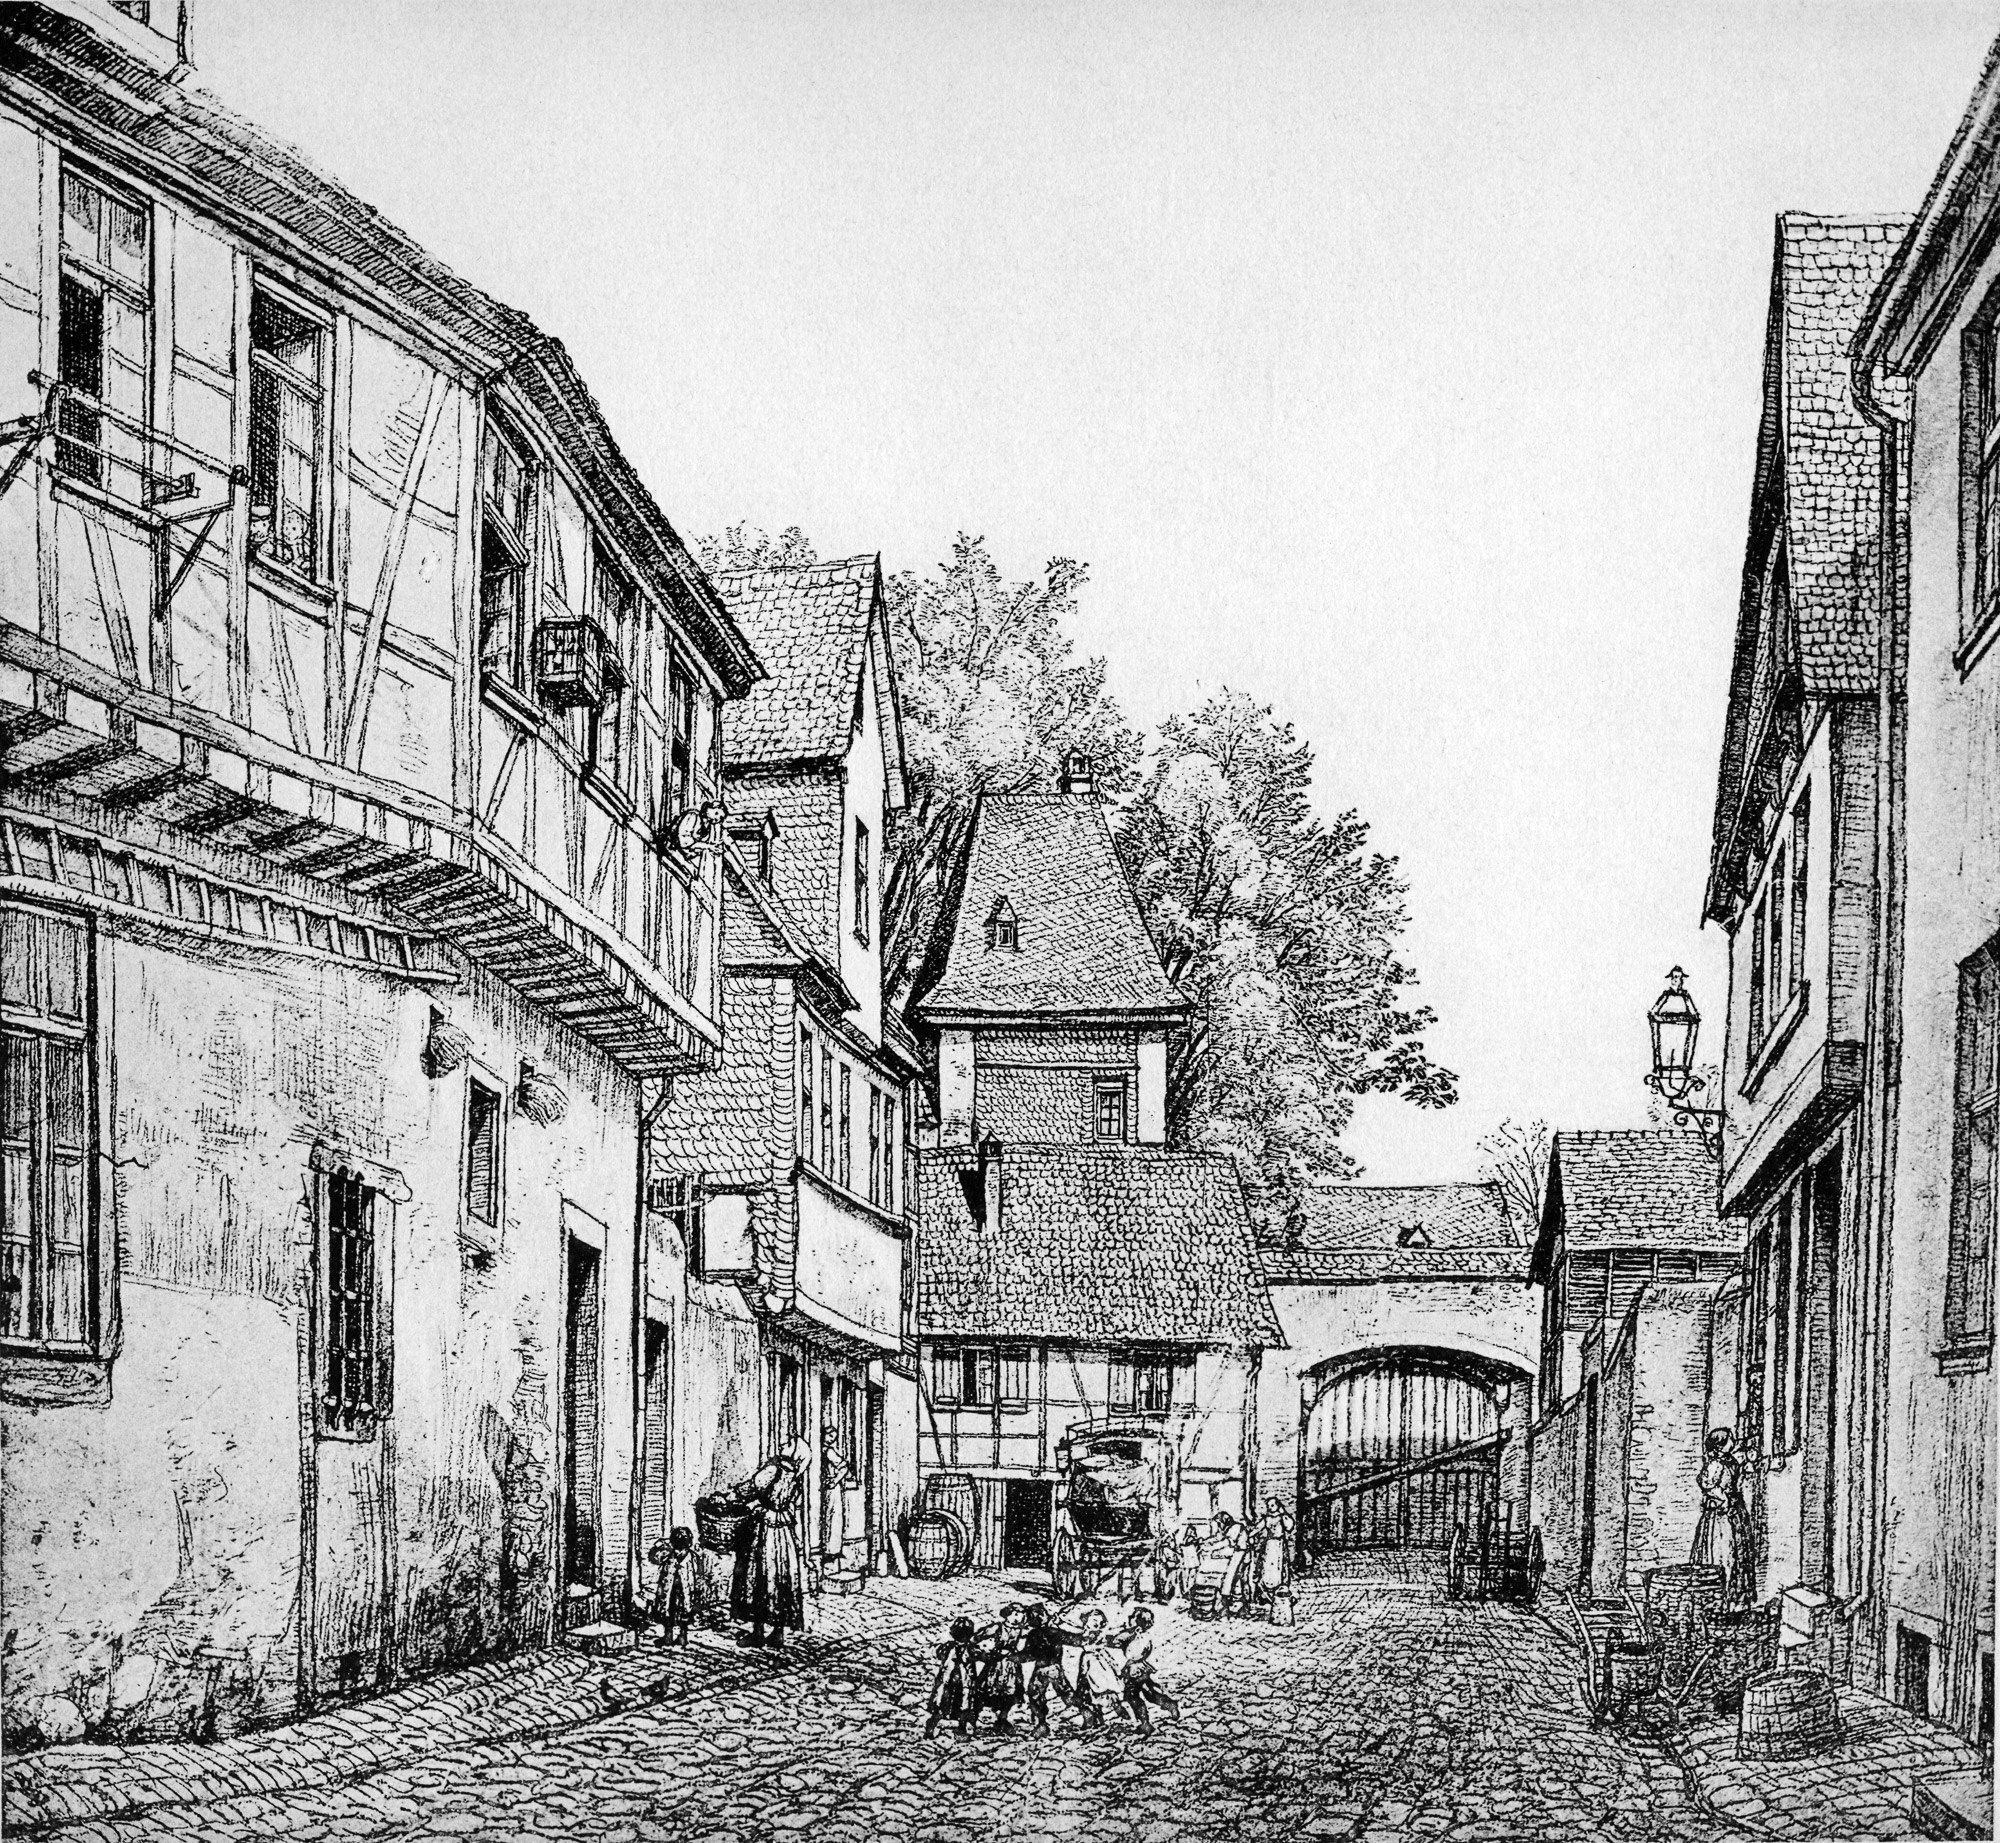 Frankfurt Am Main-Peter Becker-BAAF-019-Am Holzmagazin in der Rittergasse in Sachsenhausen-1872